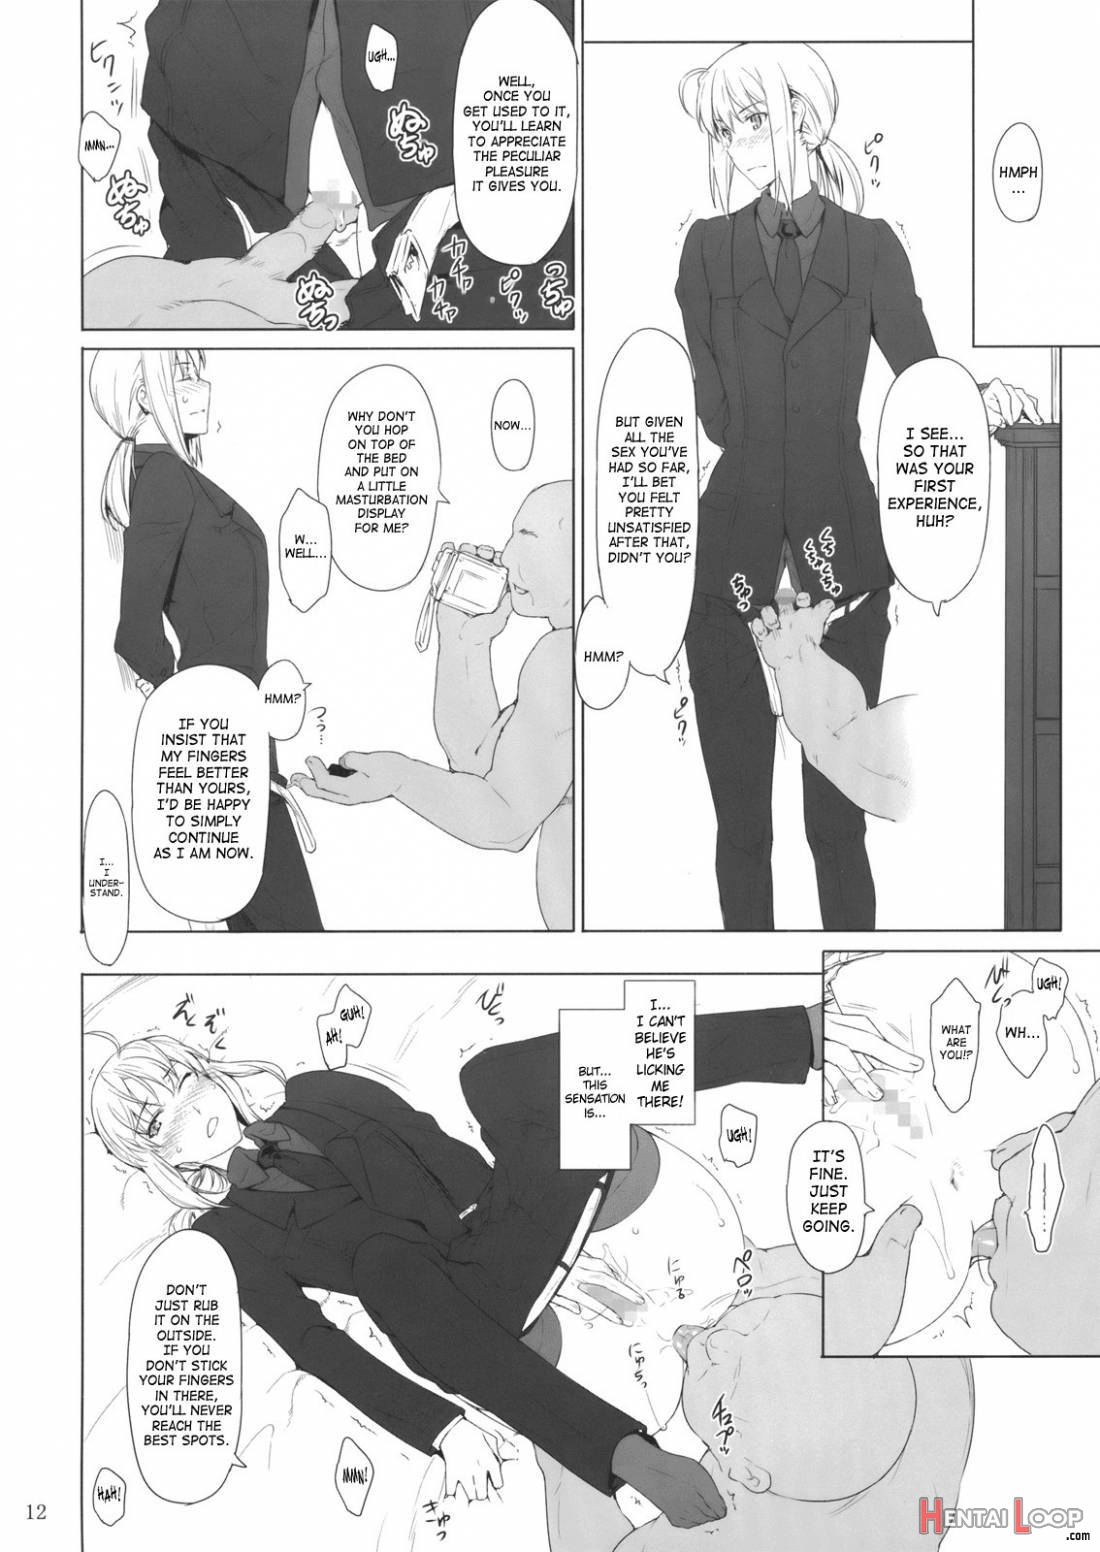 Tohsaka-ke no Kakei Jijou 9 page 11